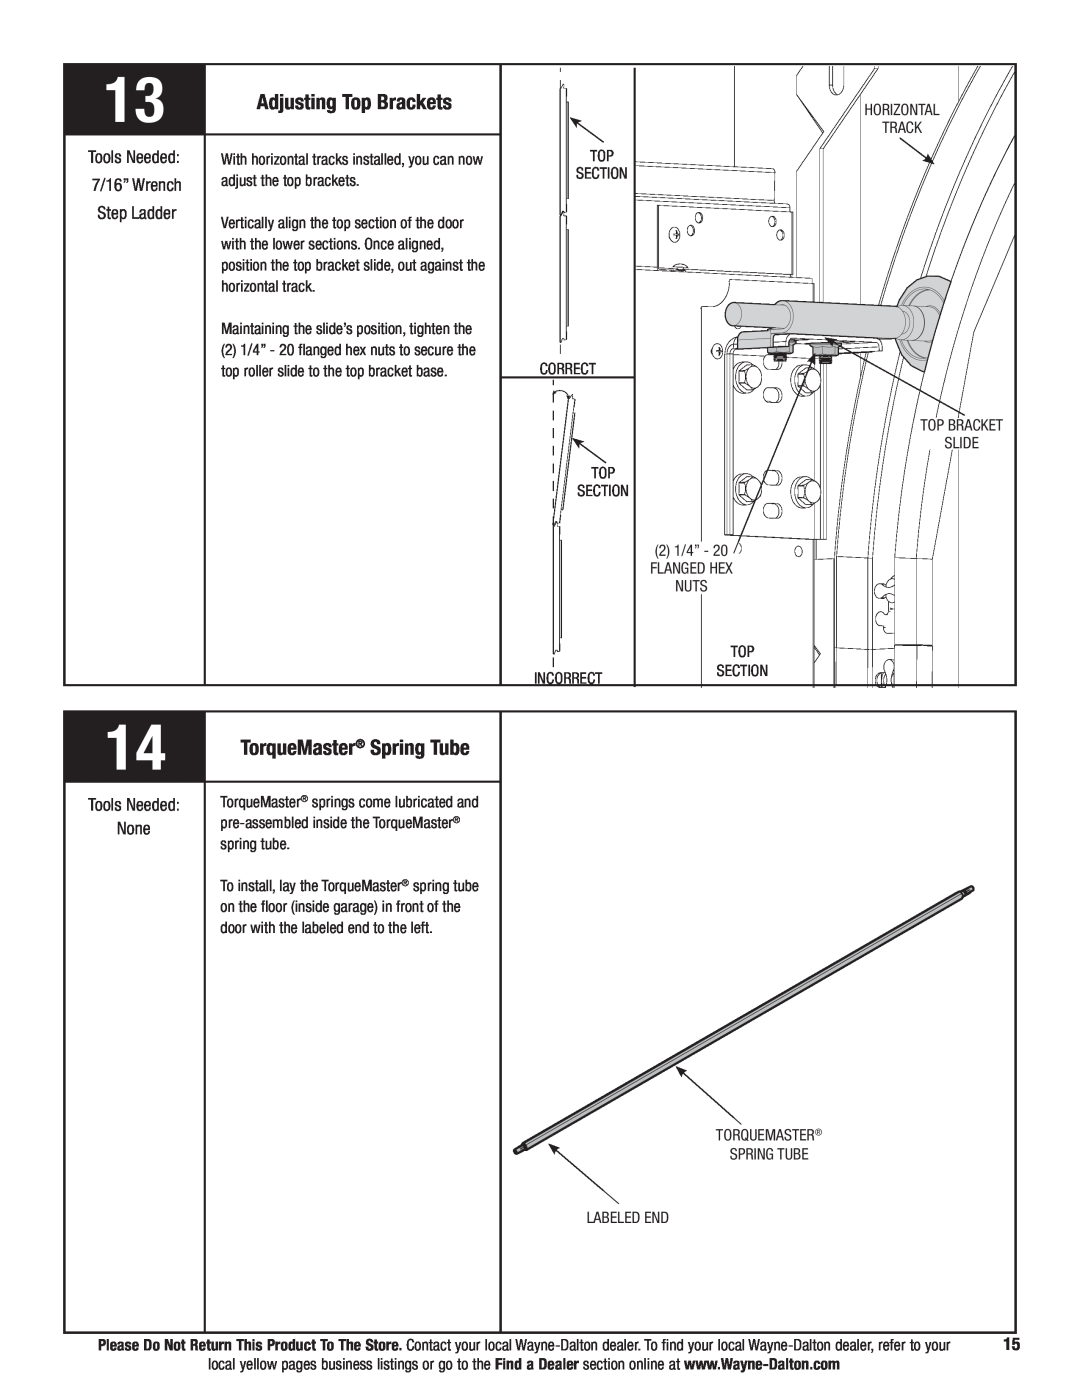 Wayne-Dalton 9700 Adjusting Top Brackets, TorqueMaster Spring Tube, Tools Needed 7/16” Wrench Step Ladder 